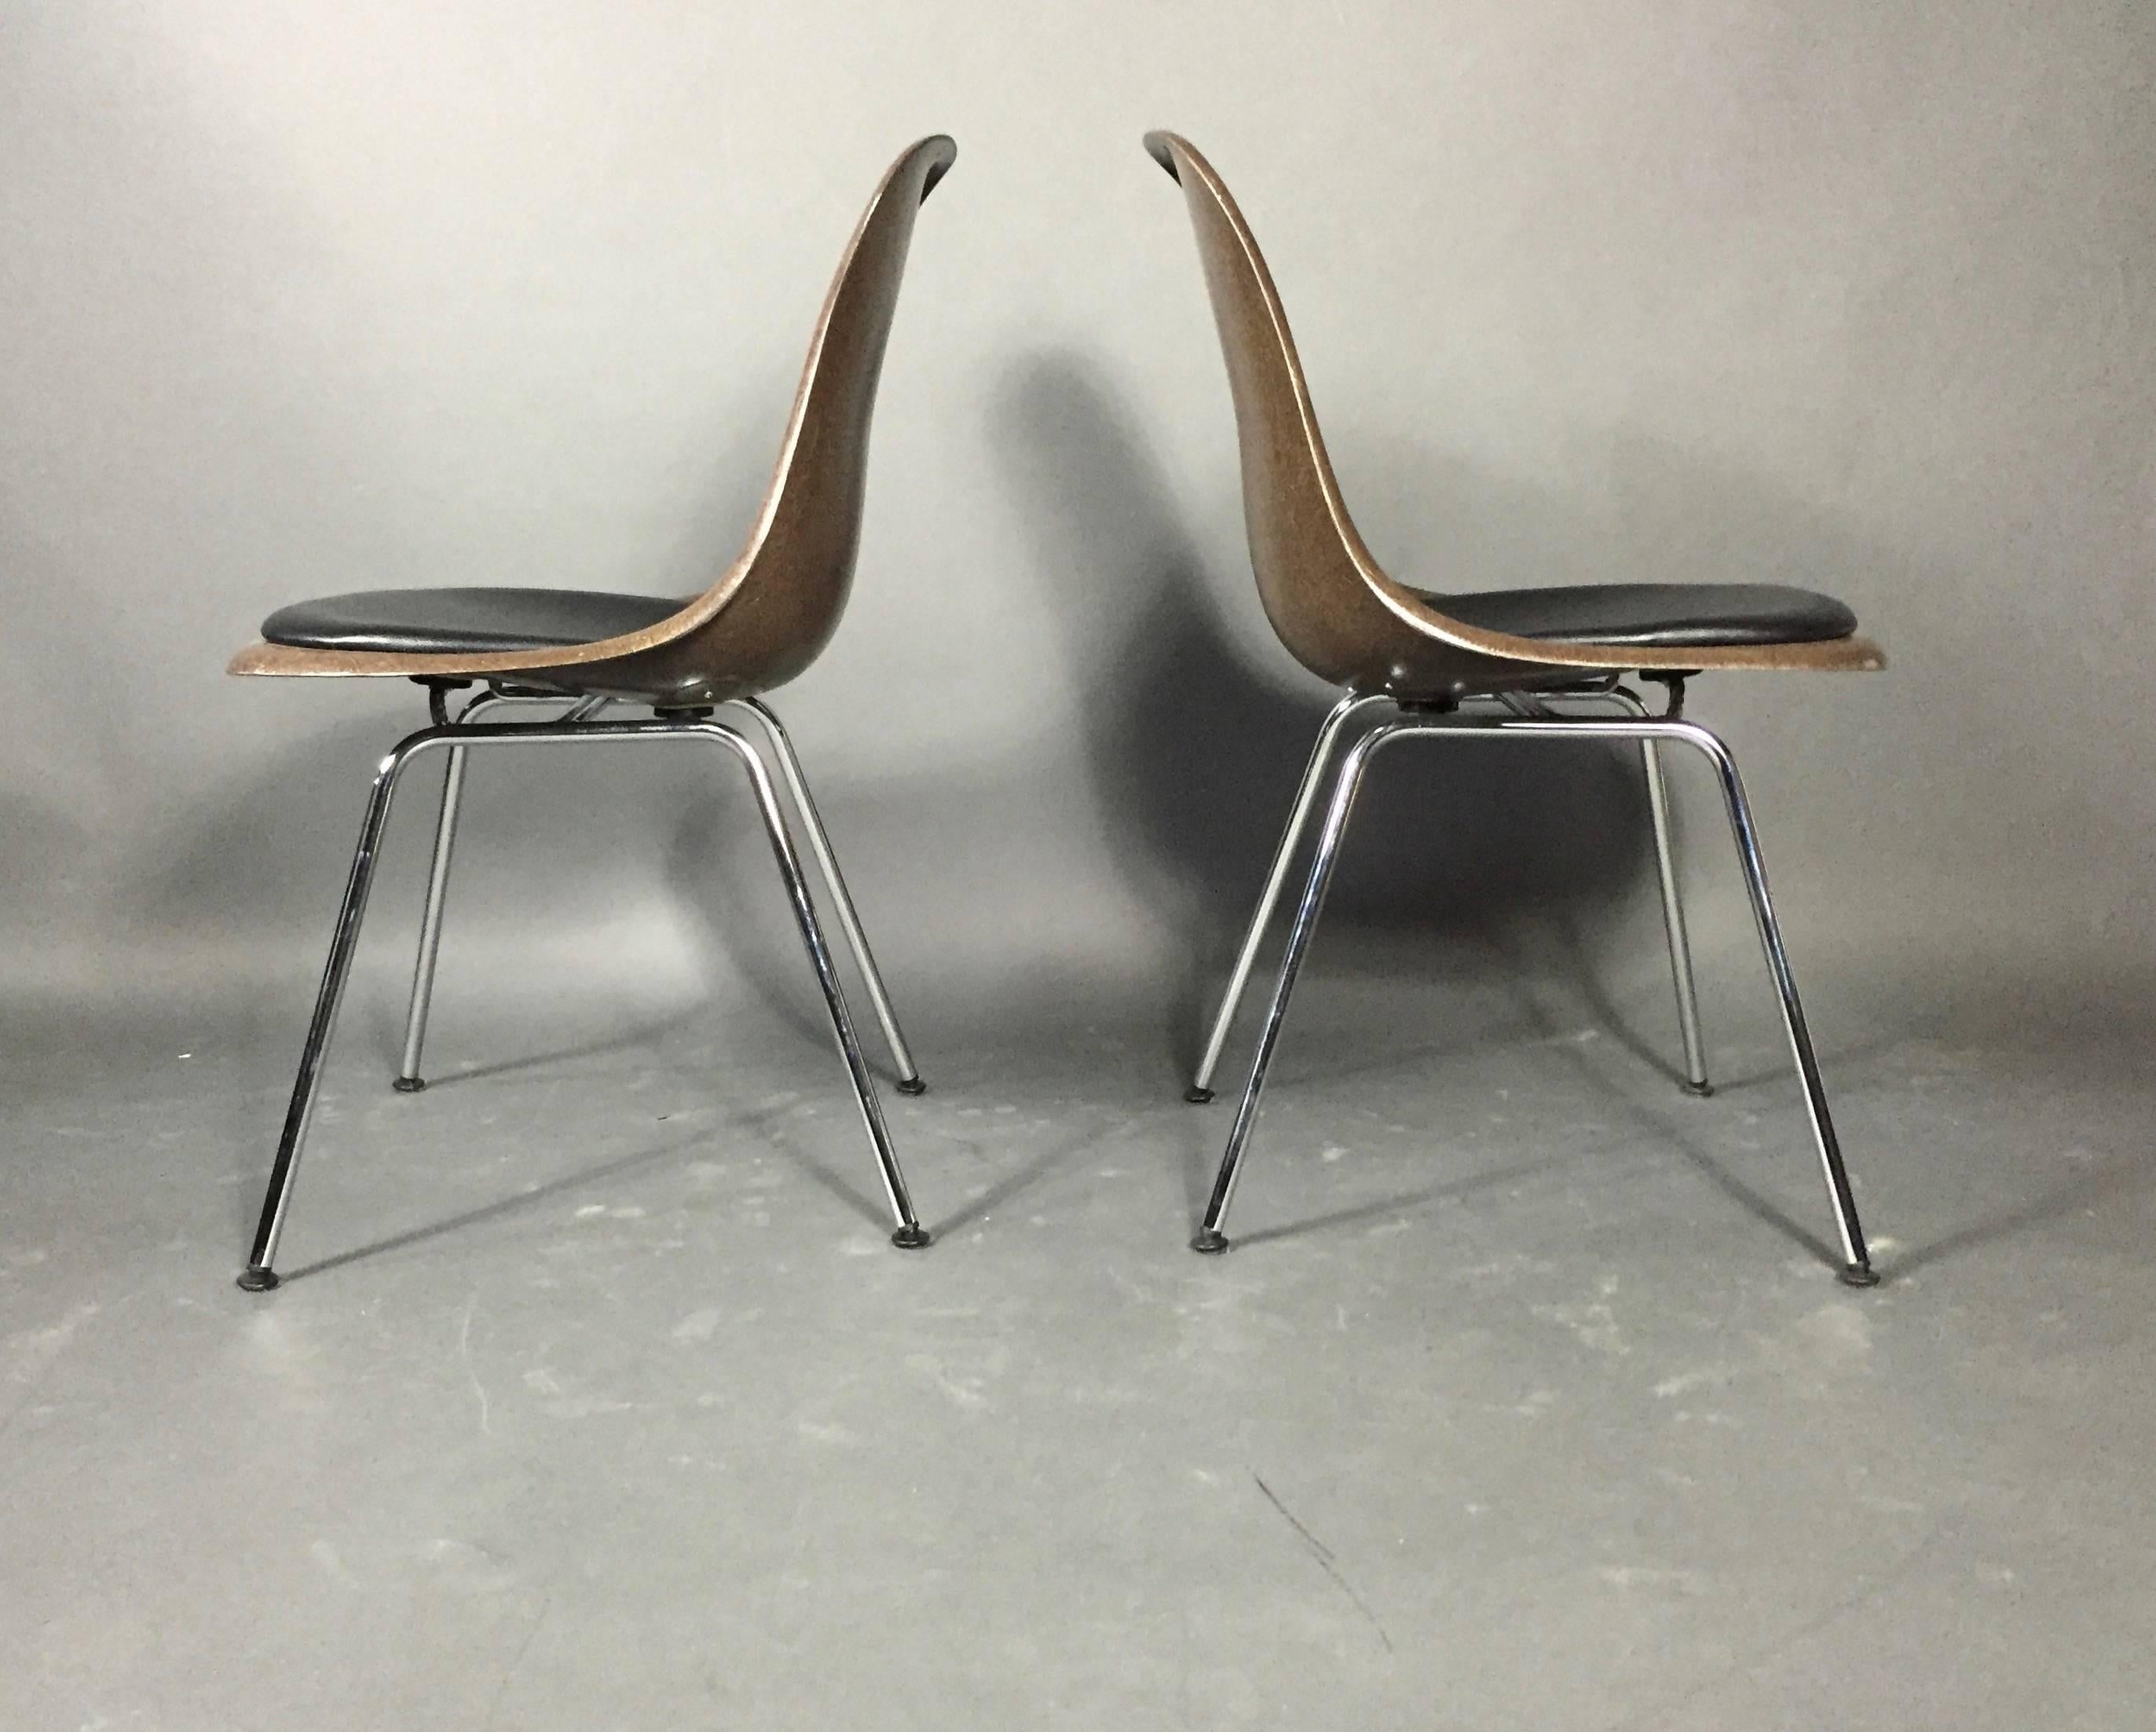 American Charles and Ray Eames Fiberglass Shell Chairs, Vitra Base, Skai Seating